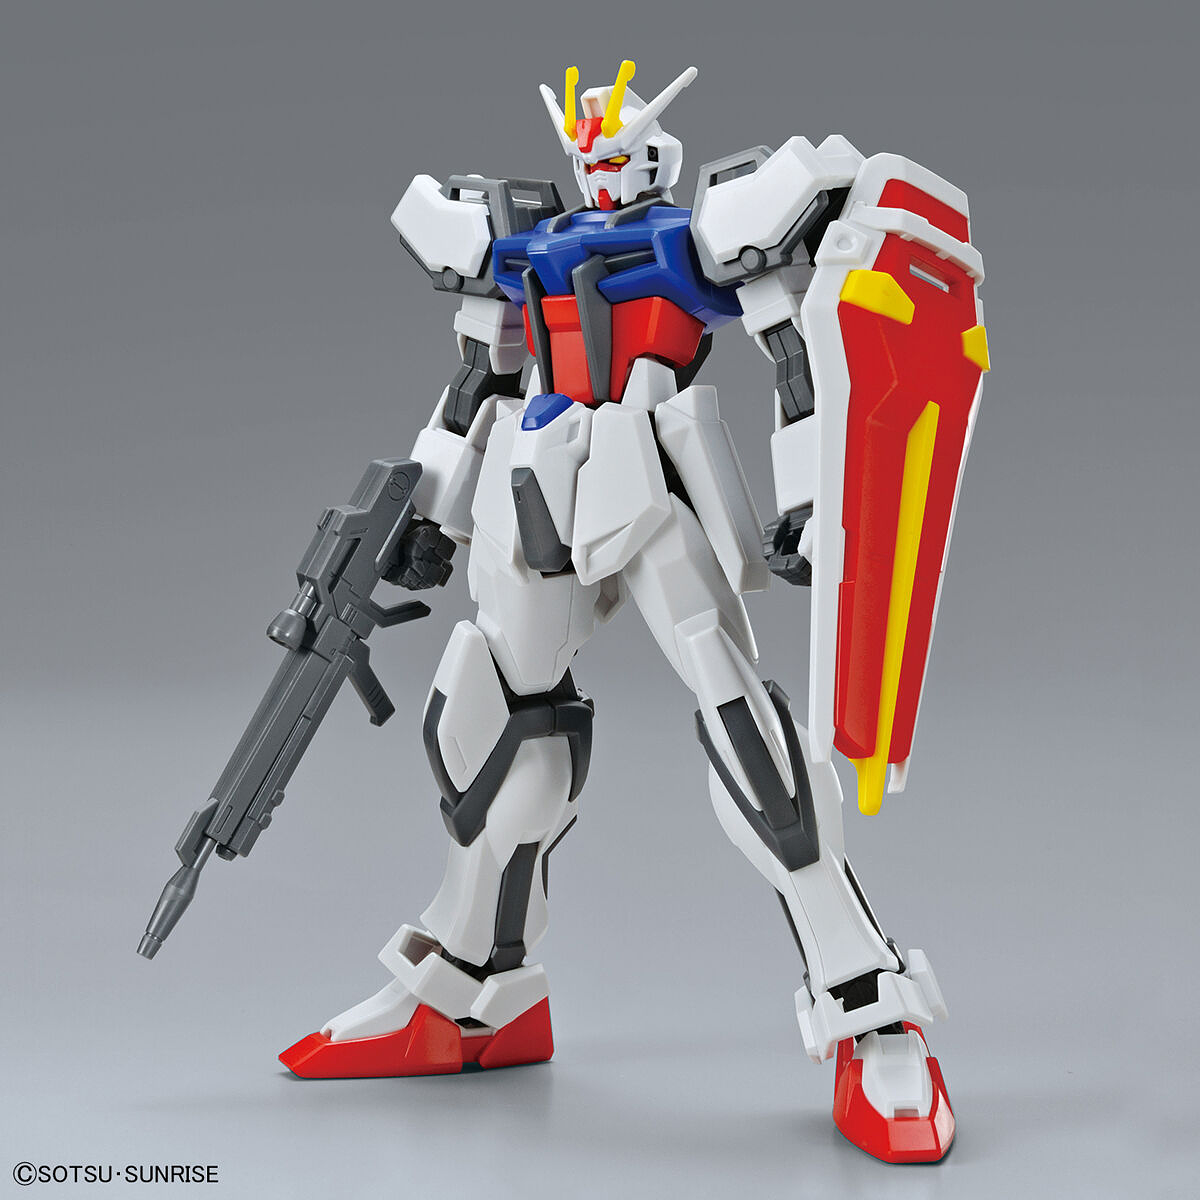 Entry Grade GAT-X105 Strike Gundam